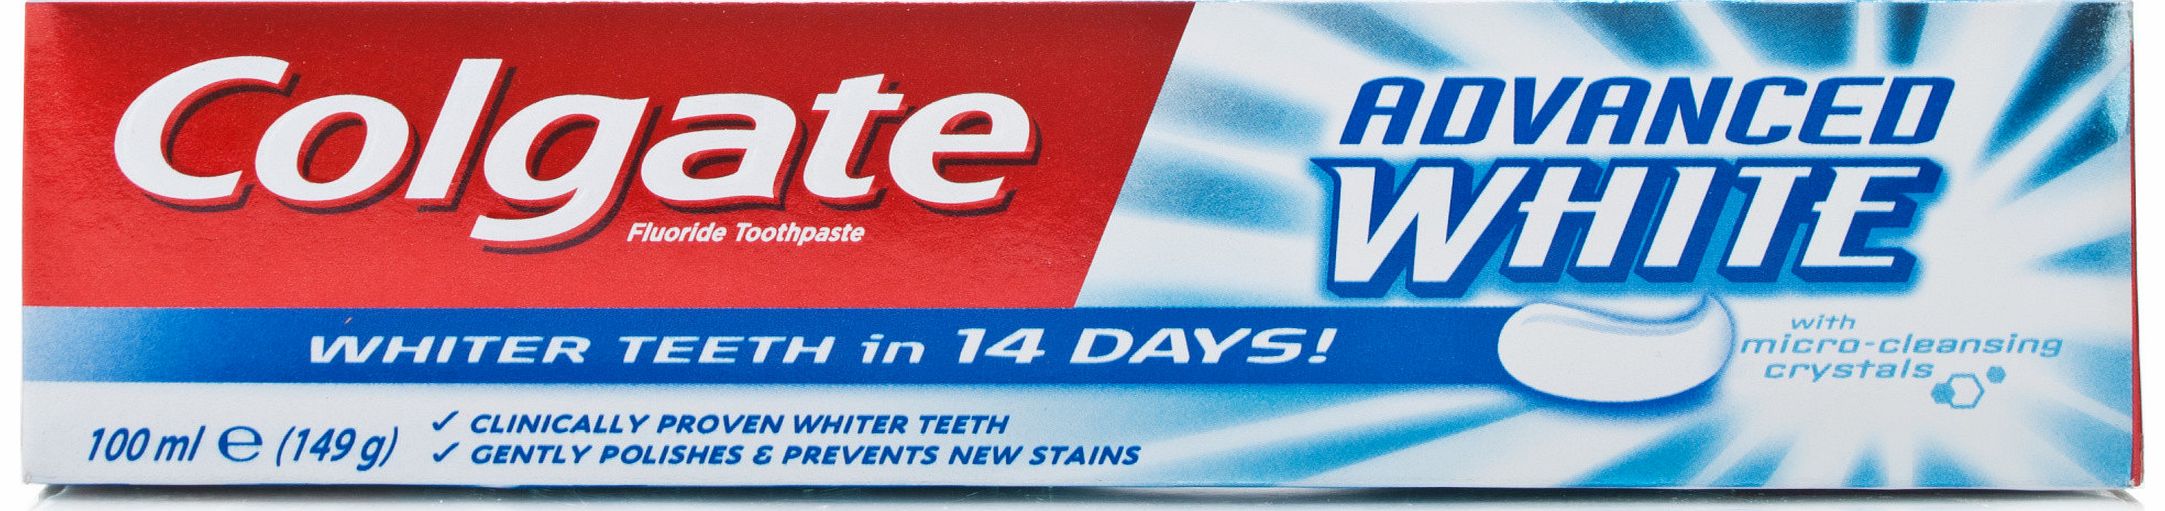 Colgate Advanced Whitening Toothpaste (EU Pack)